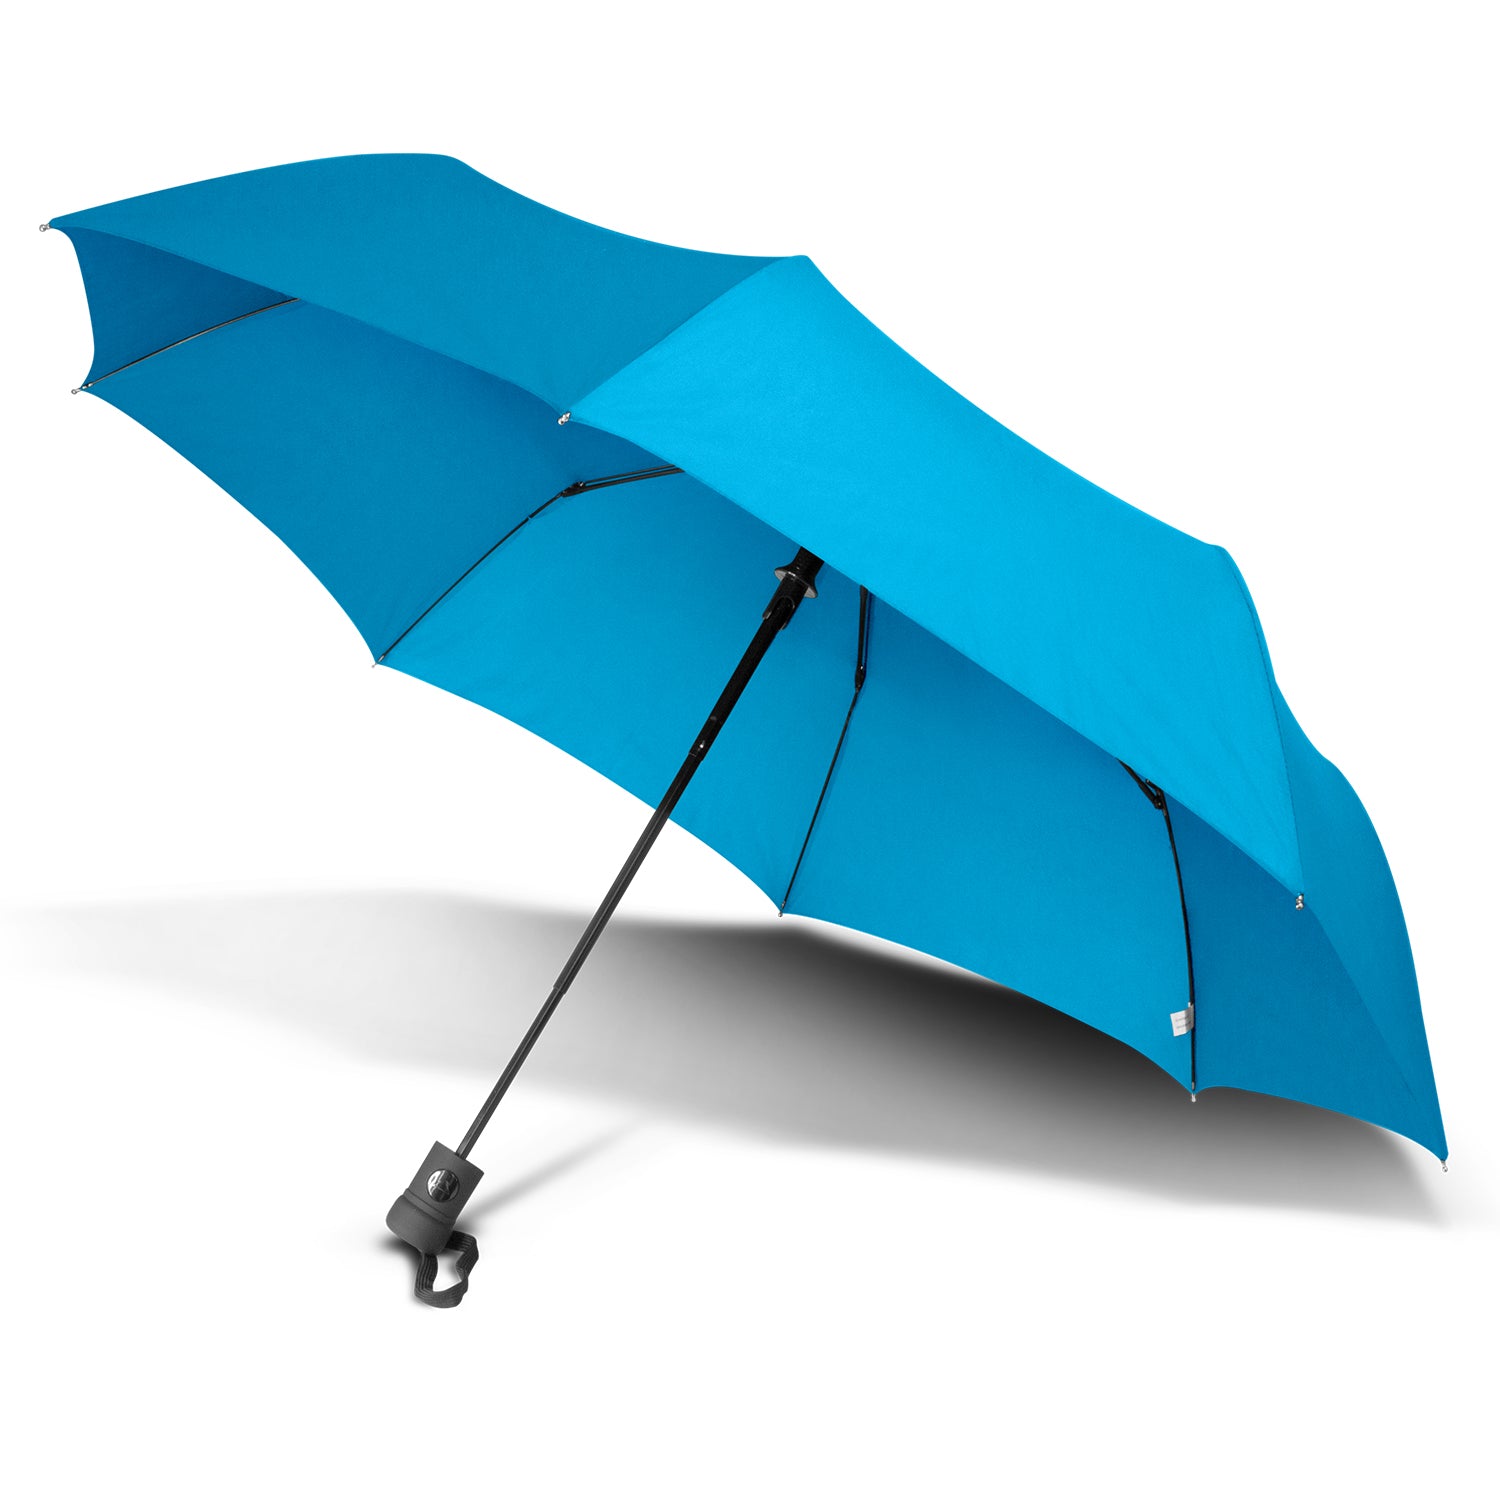 PEROS-TRI-FOLD-COMPACT-Umbrella-Compact-Travel-Umbrella-collapsible-steel-shaft-sky-blue